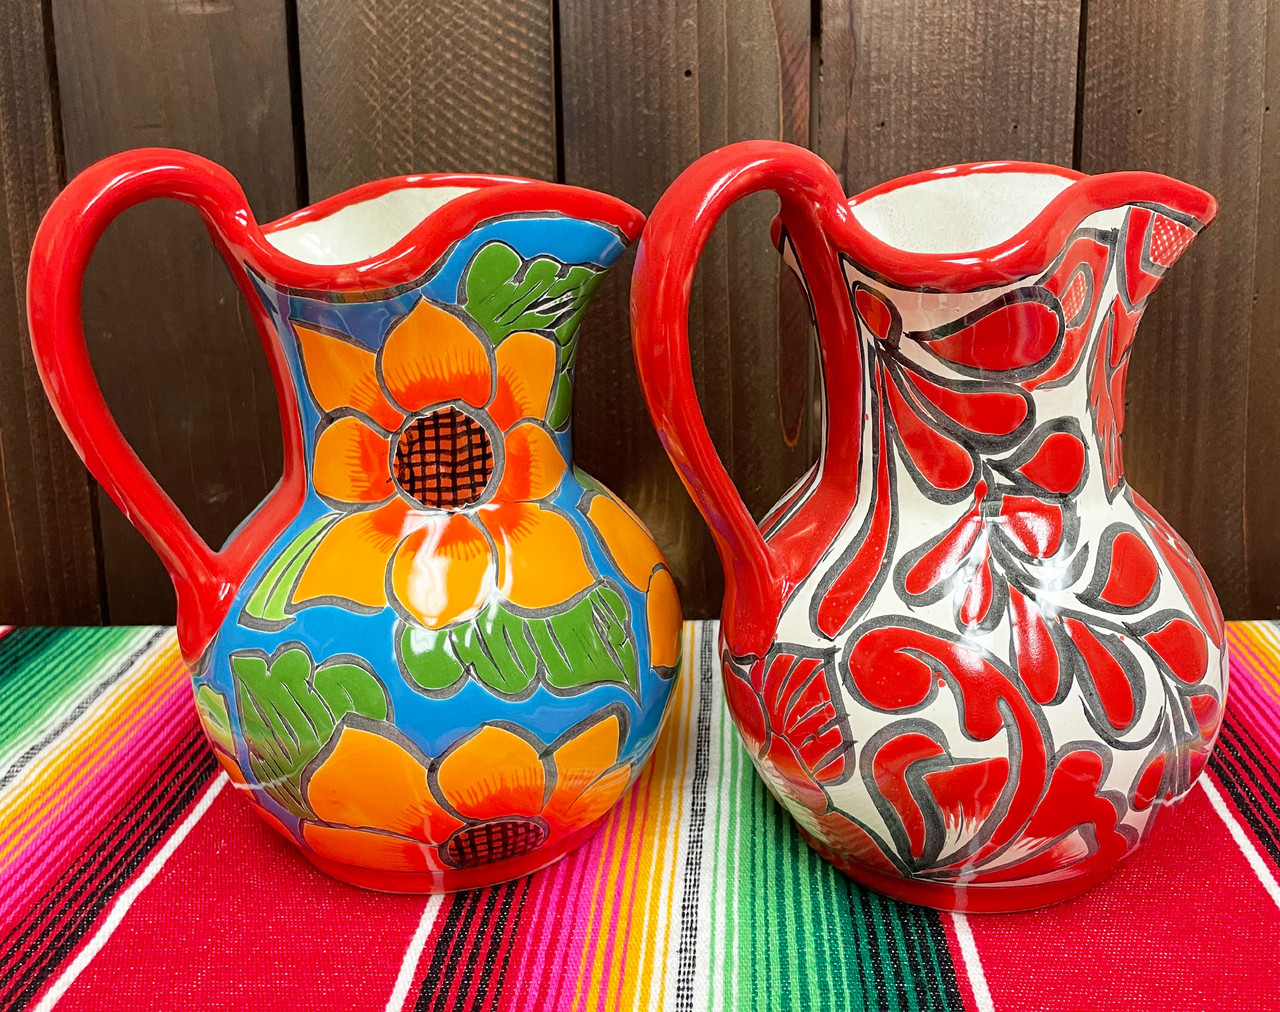 Mexican Floral Talavera Pitcher & Glass Set 9.5 (33bc596) - Mission Del  Rey Southwest